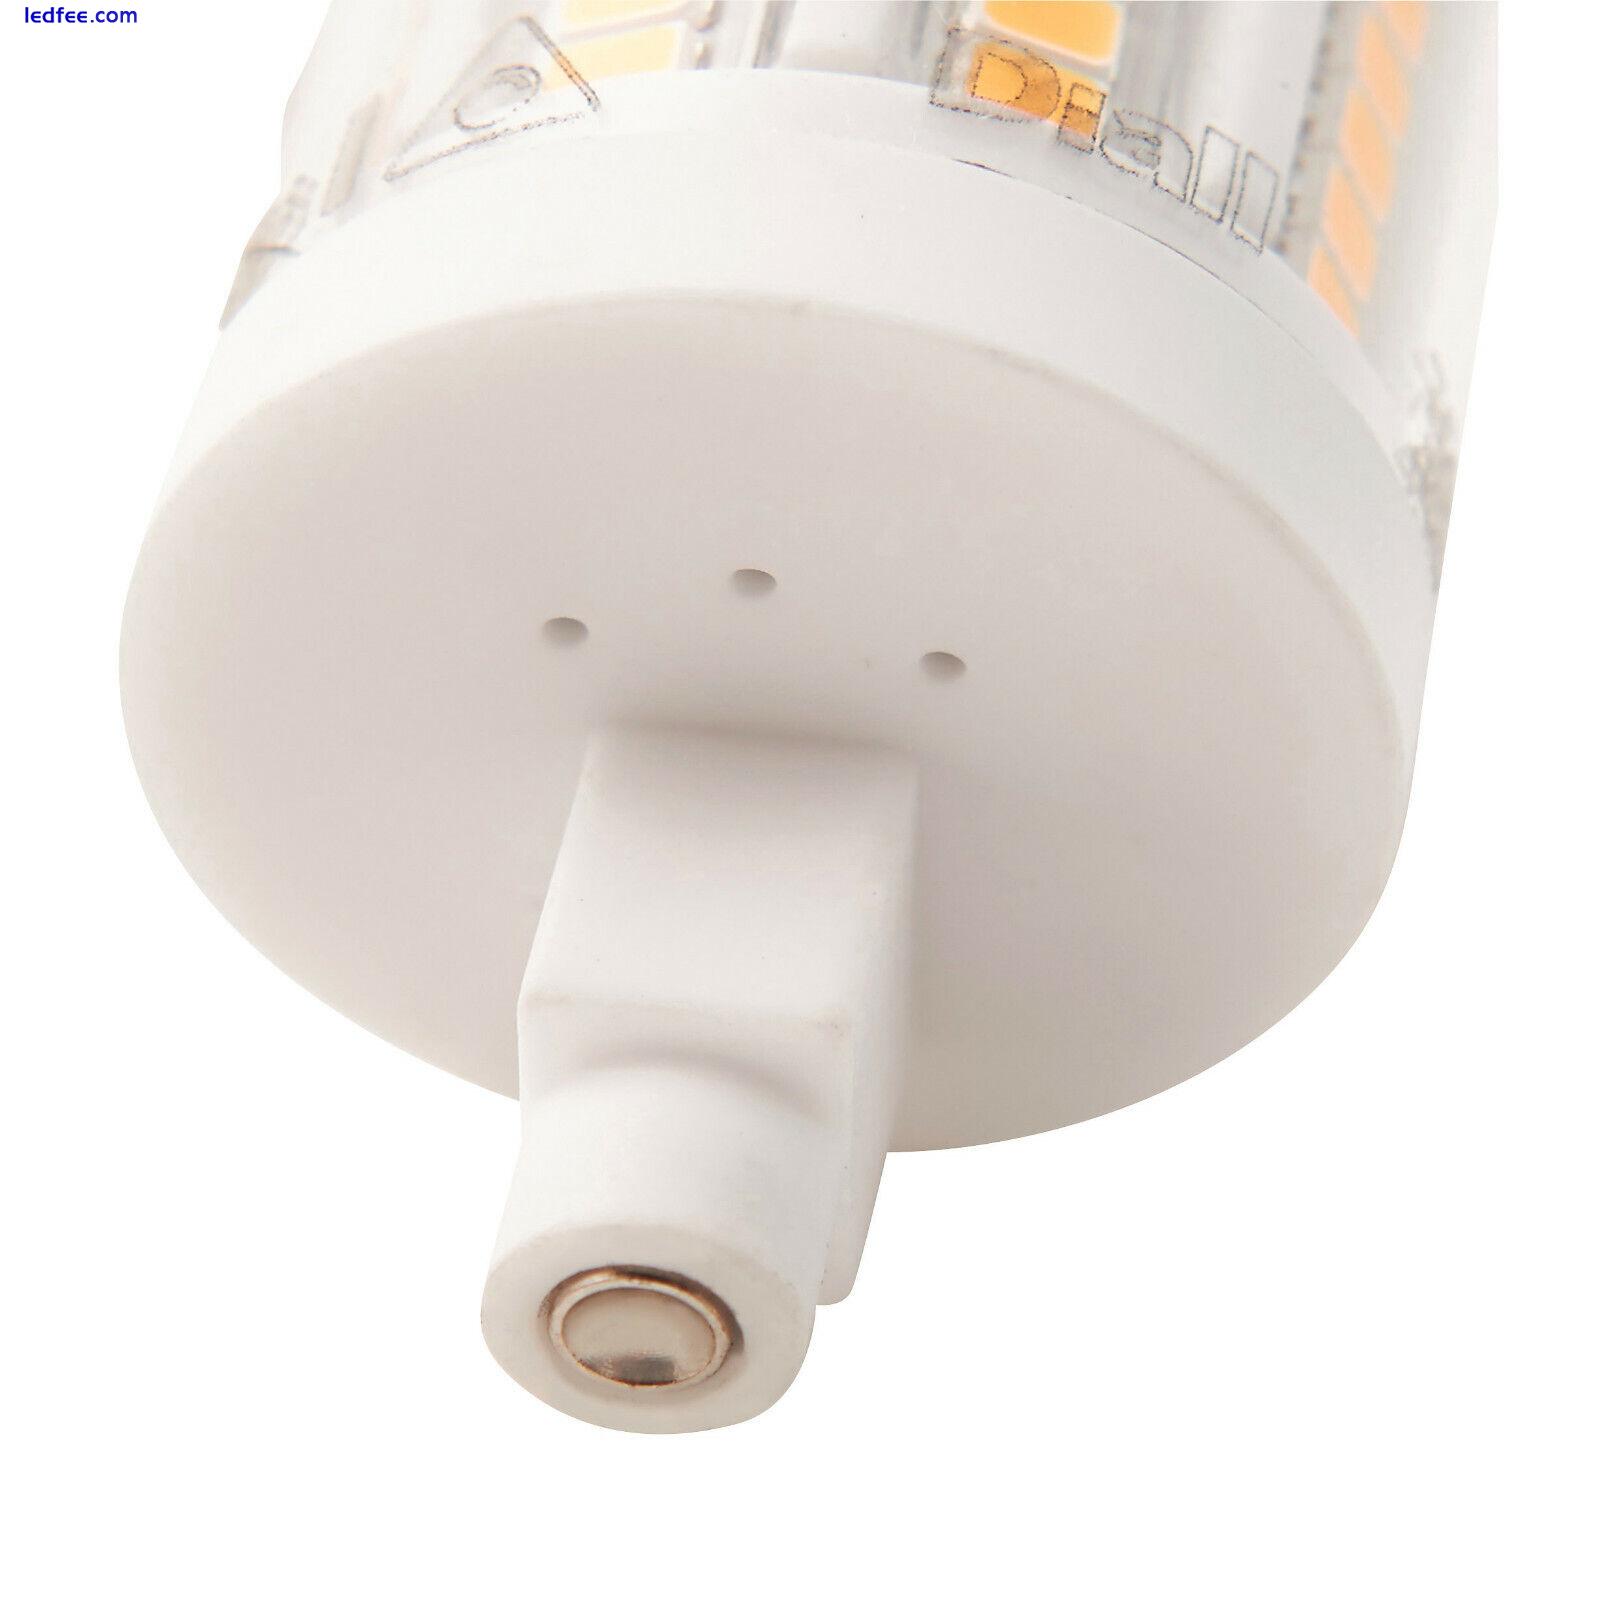 Diall R7s Warm White Tube LED Energy Saving Light Bulbs Choose Watt Output 0 